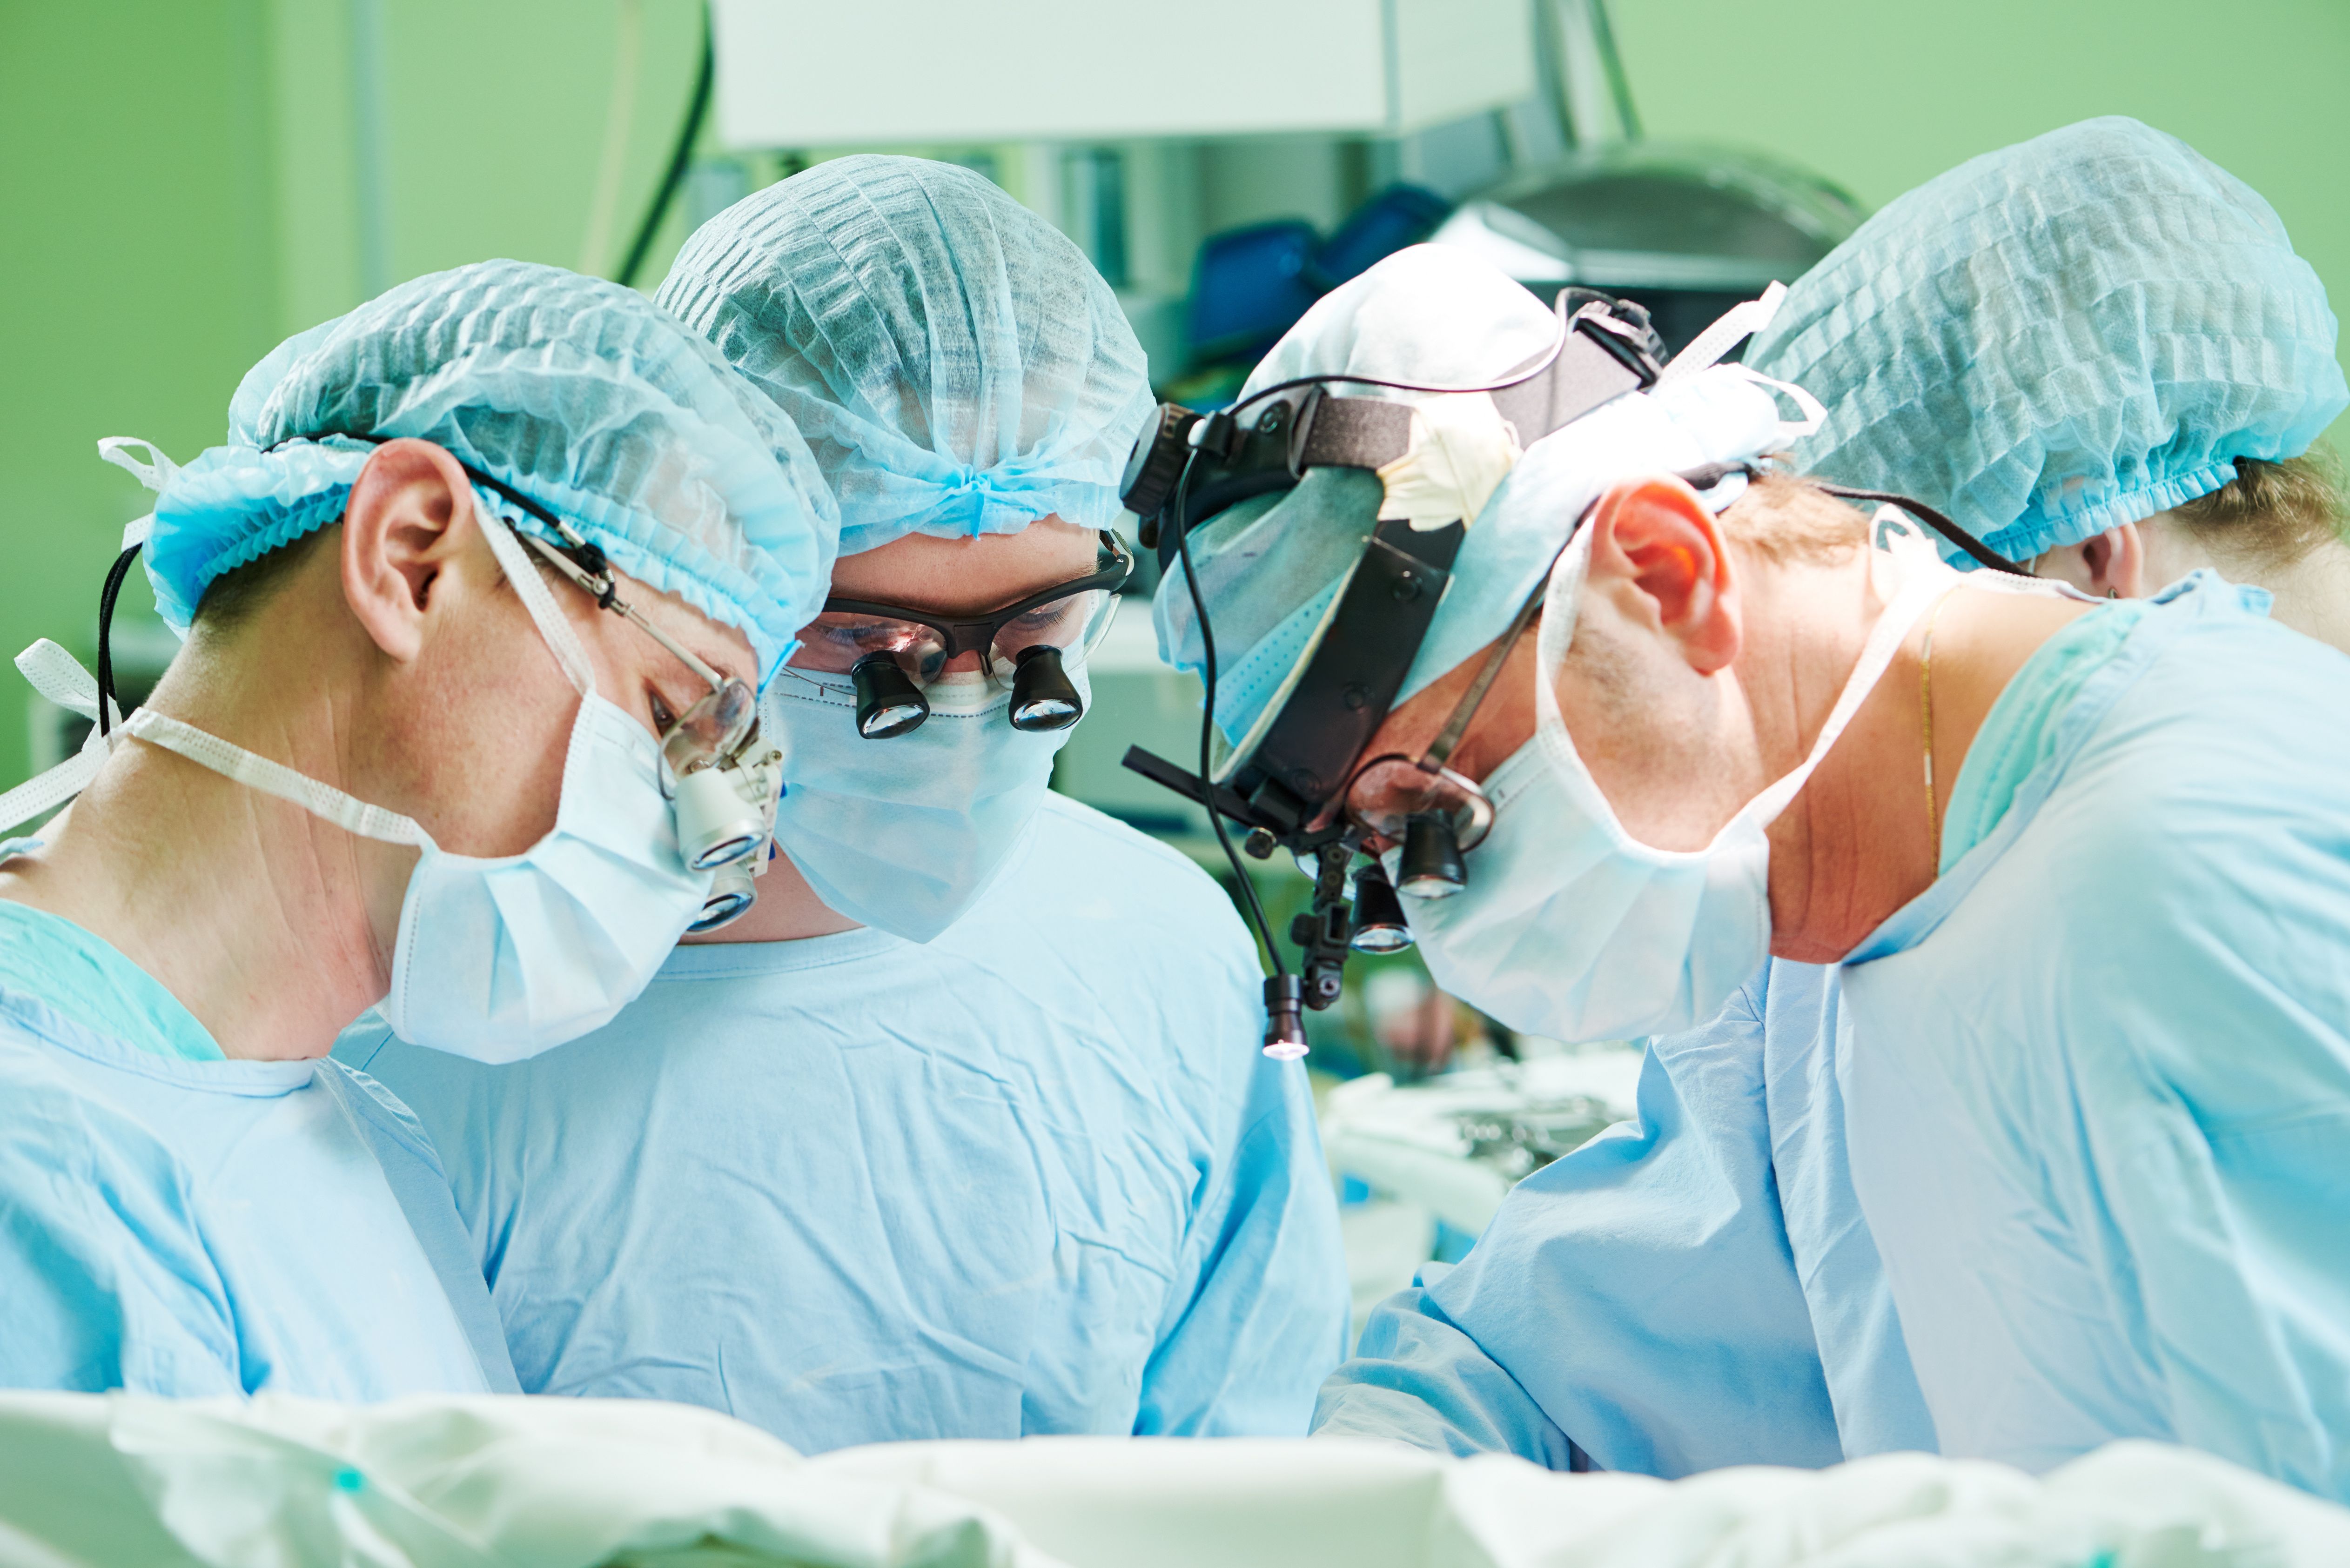 Операция в 75 лет. Кардиохирургические операции. Хирургические операции на сердце. Кардиохирург в операционной.